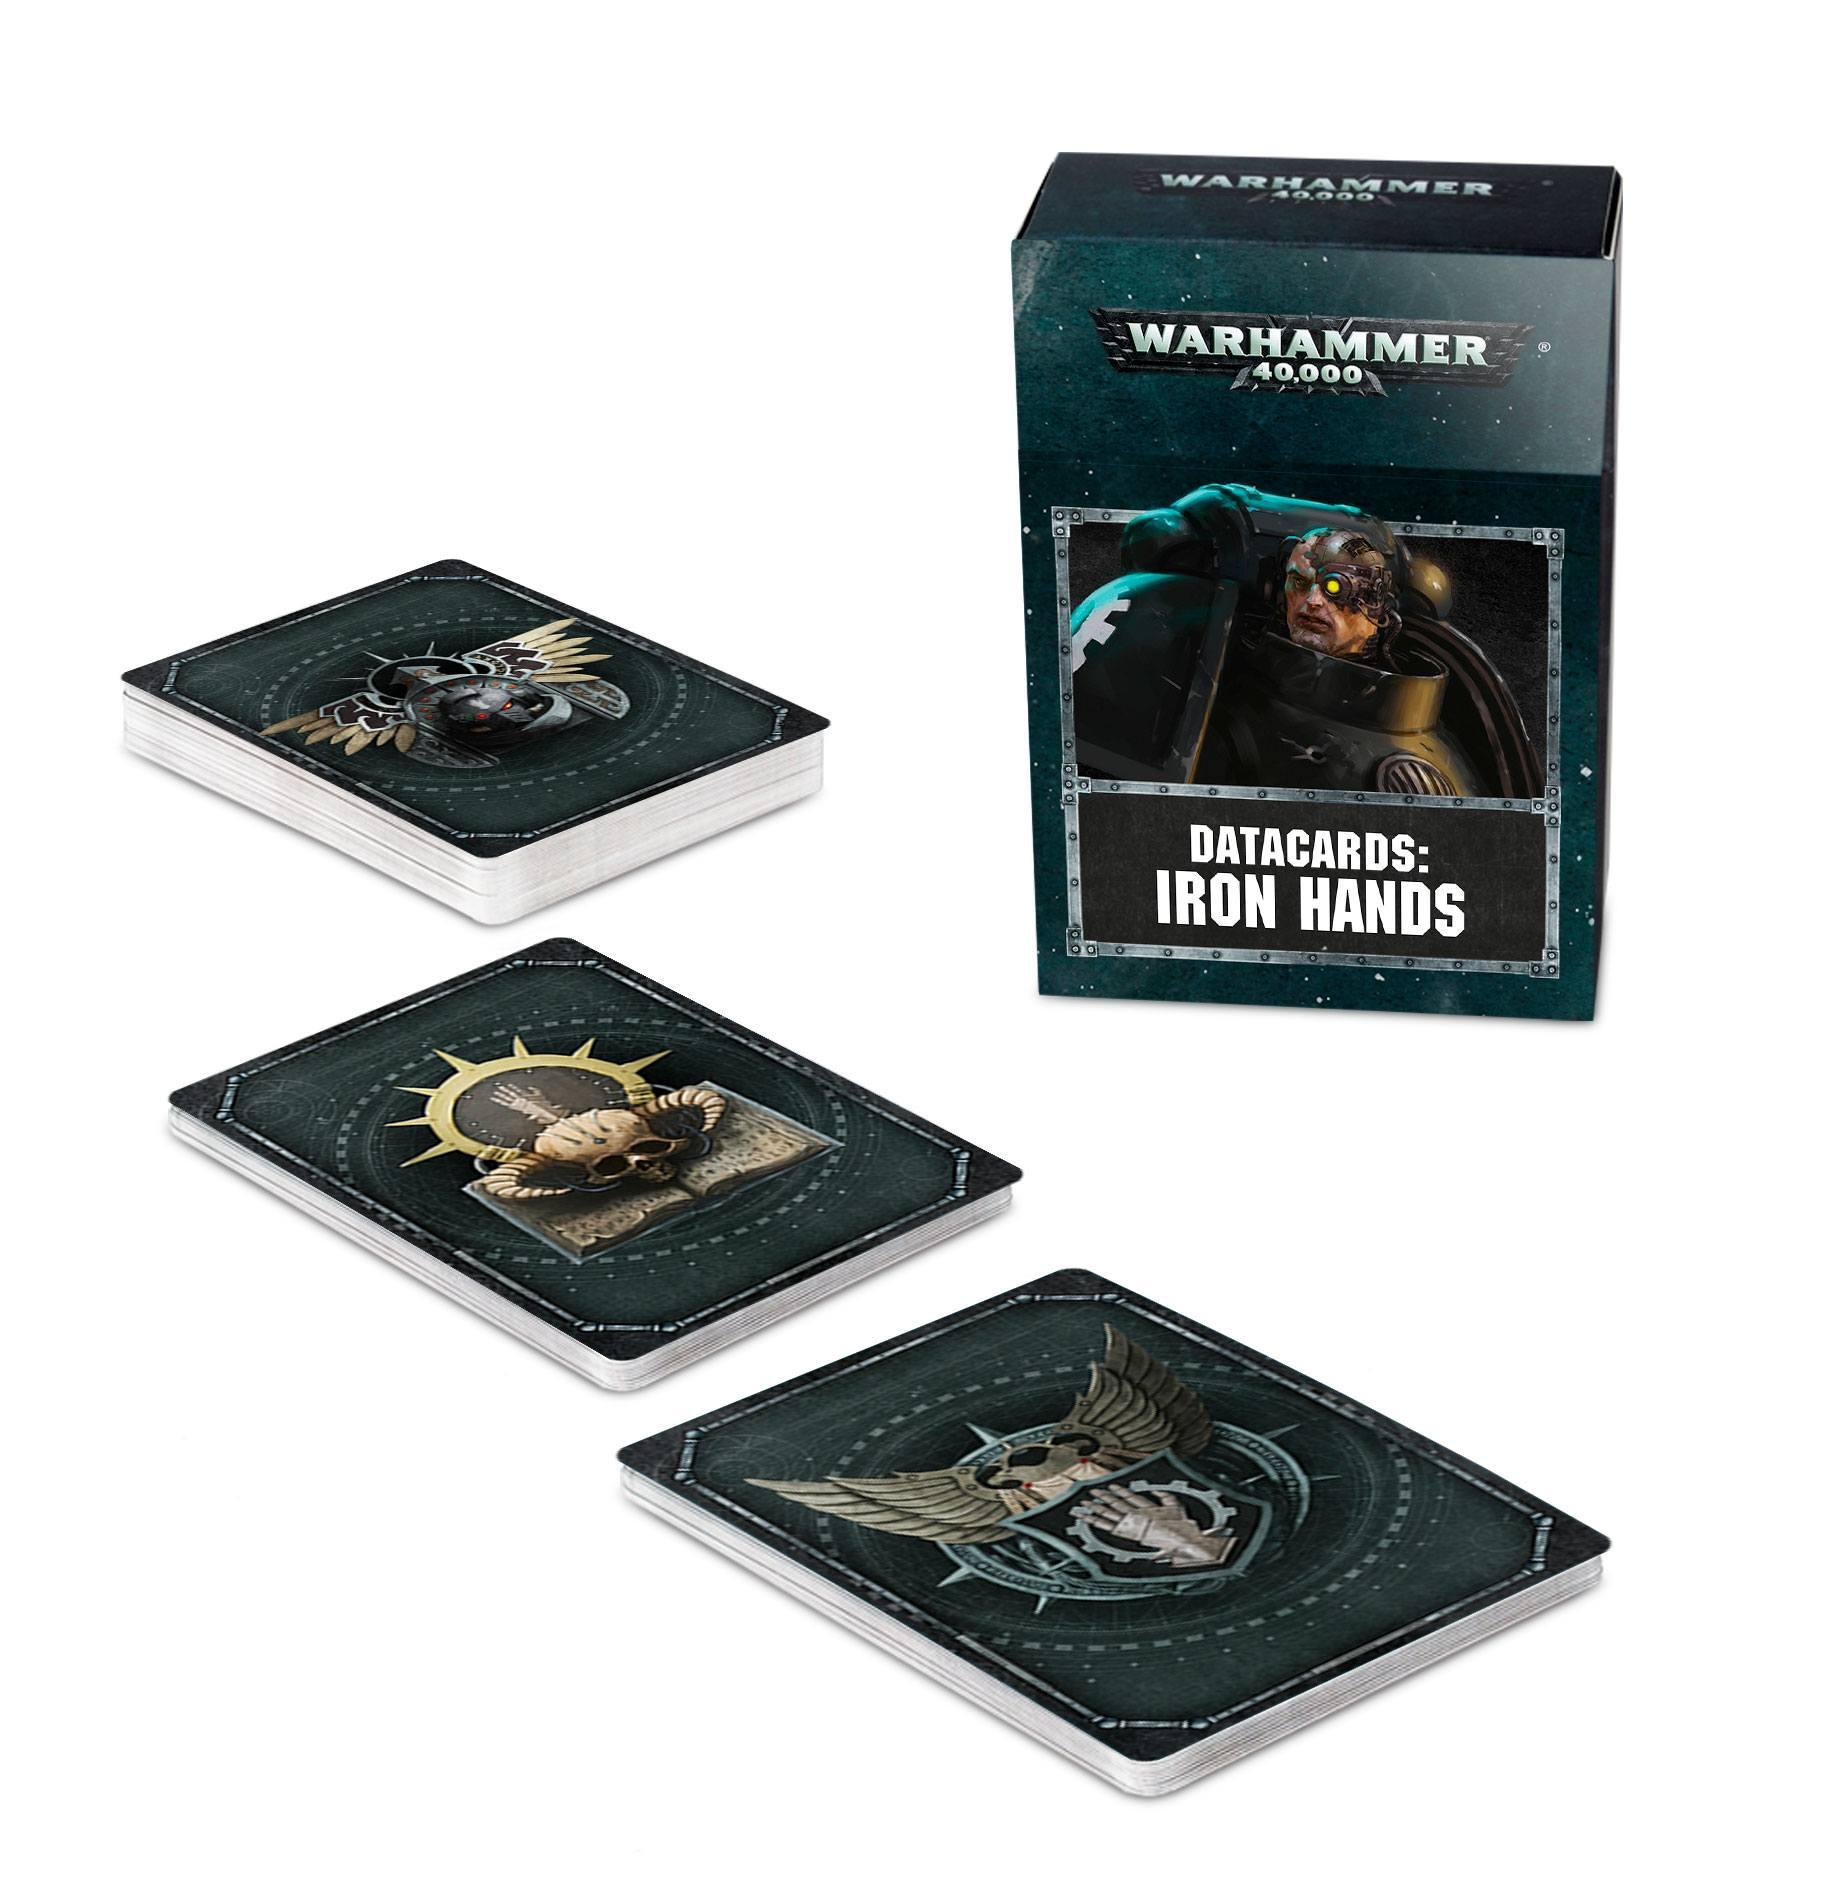 Warhammer 40,000 - Datakarten: Iron Hands